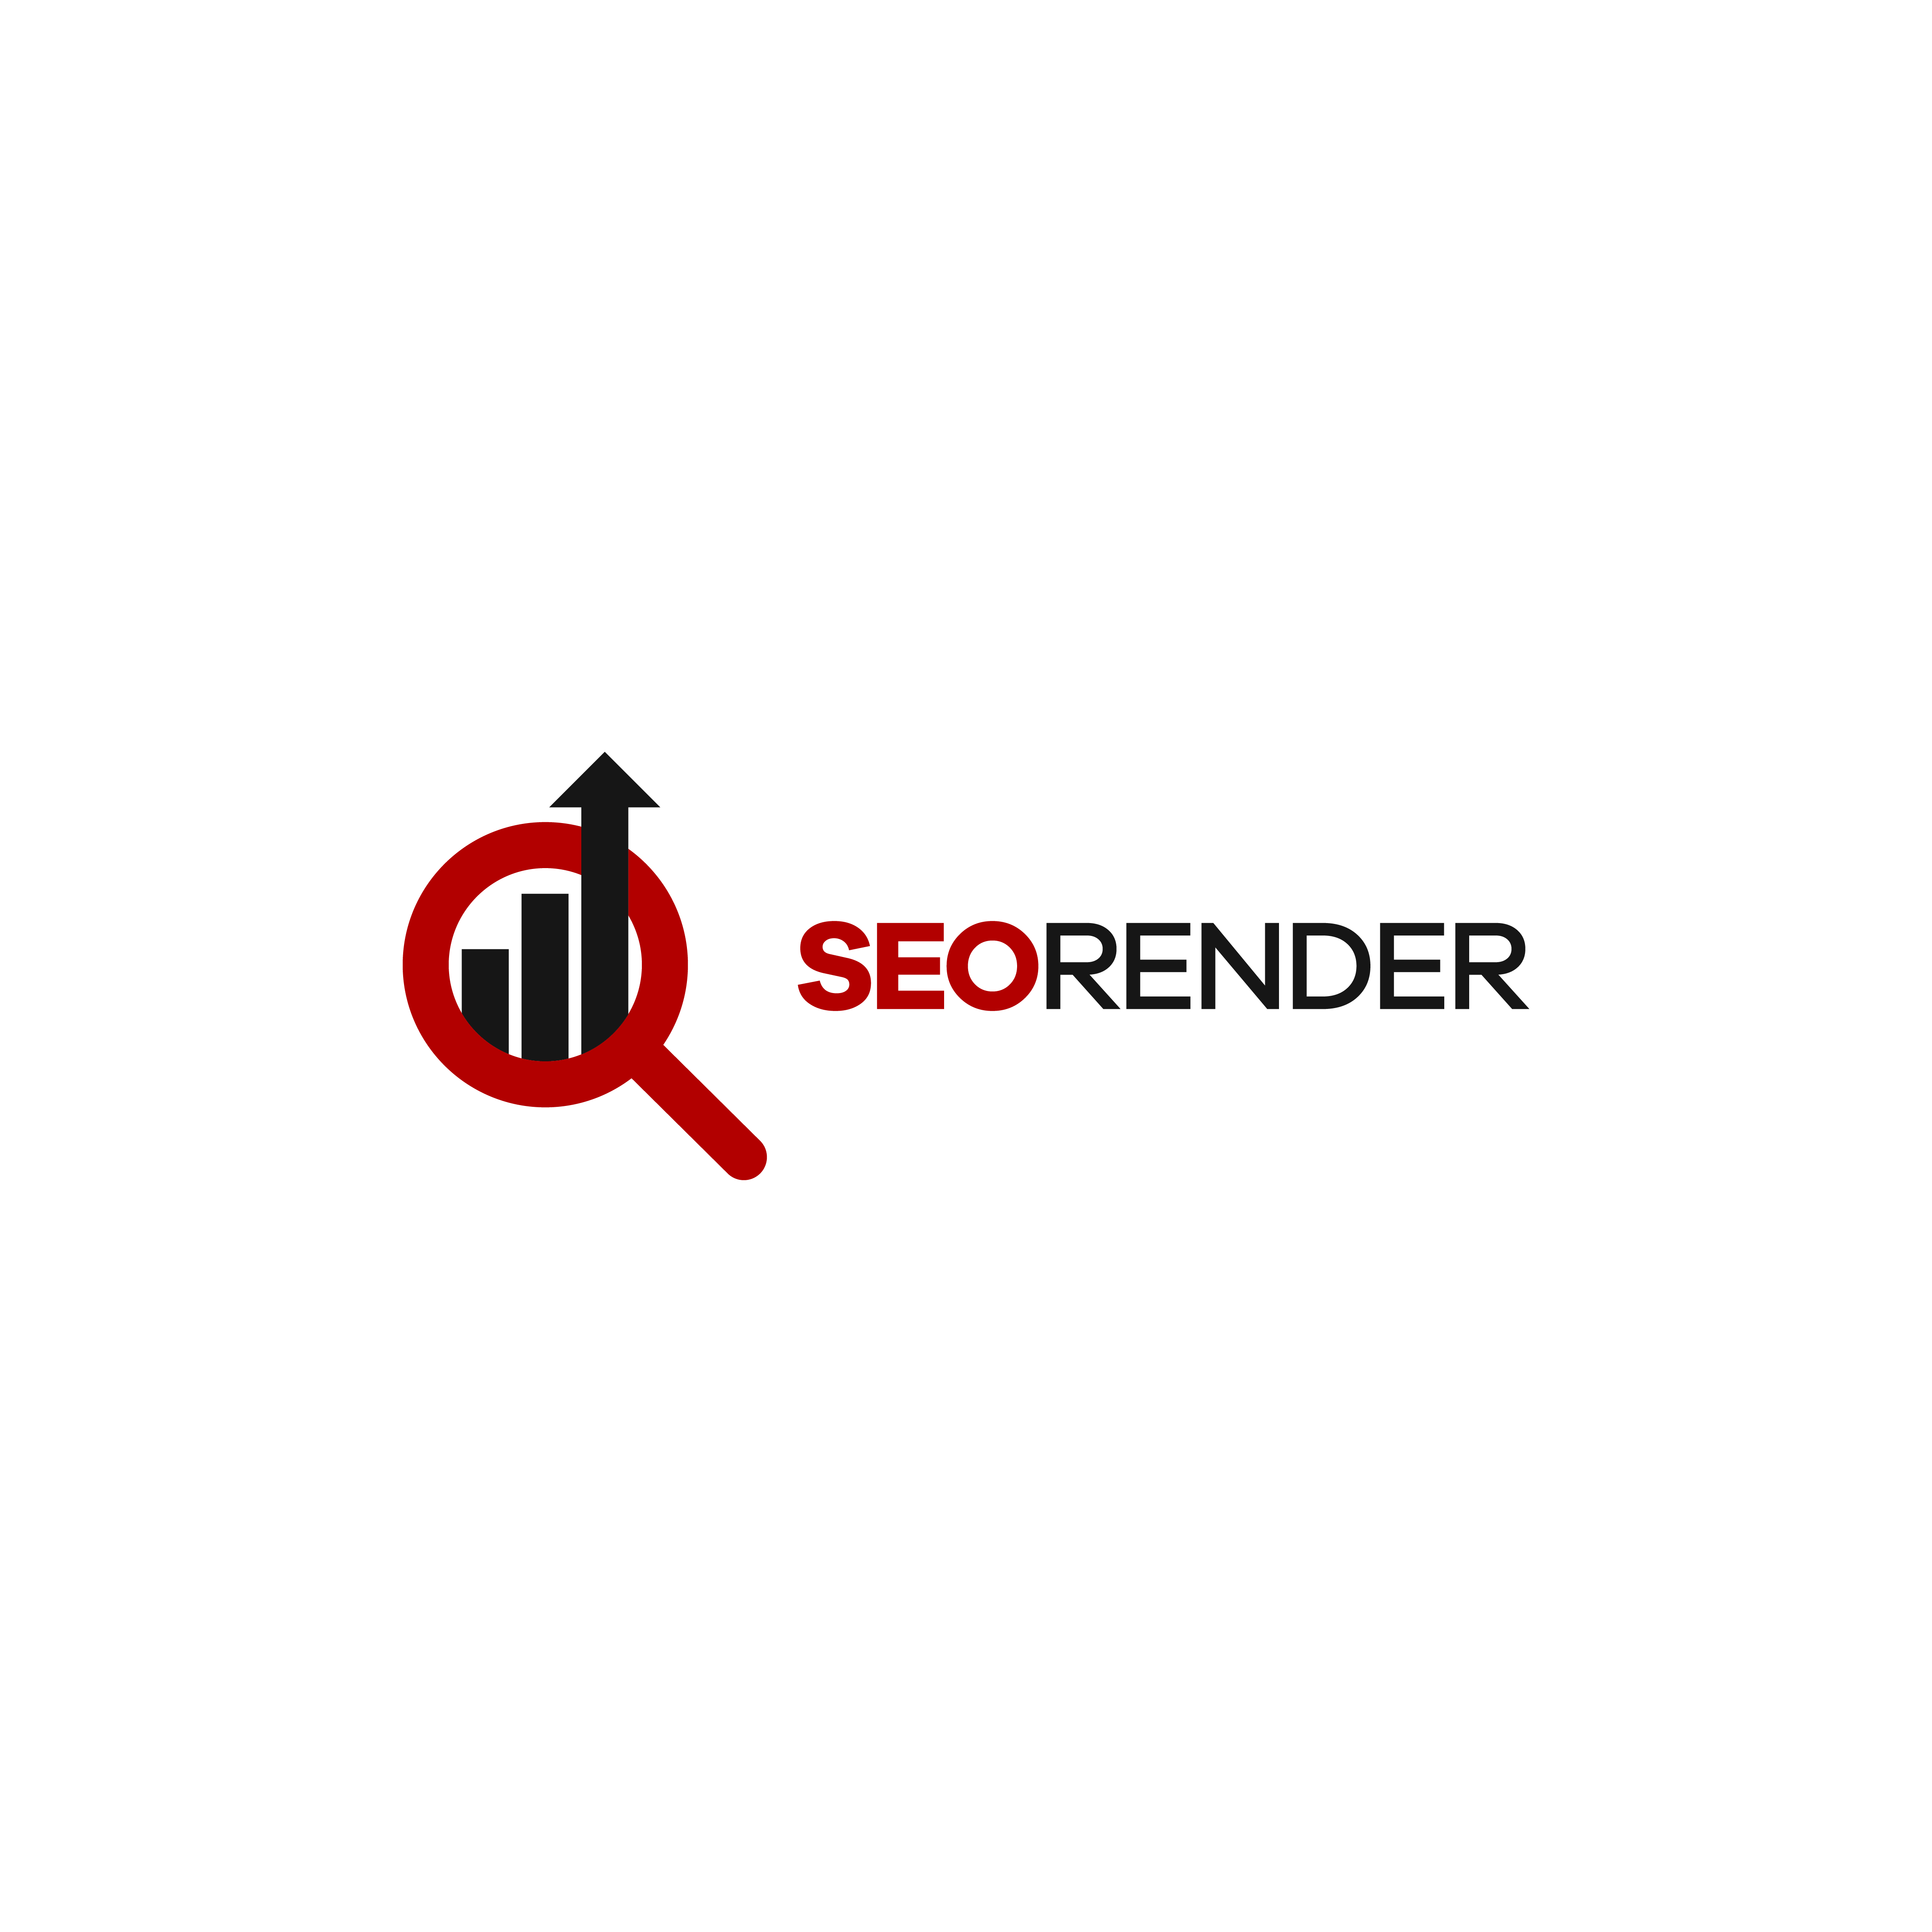 SEO-render-logo